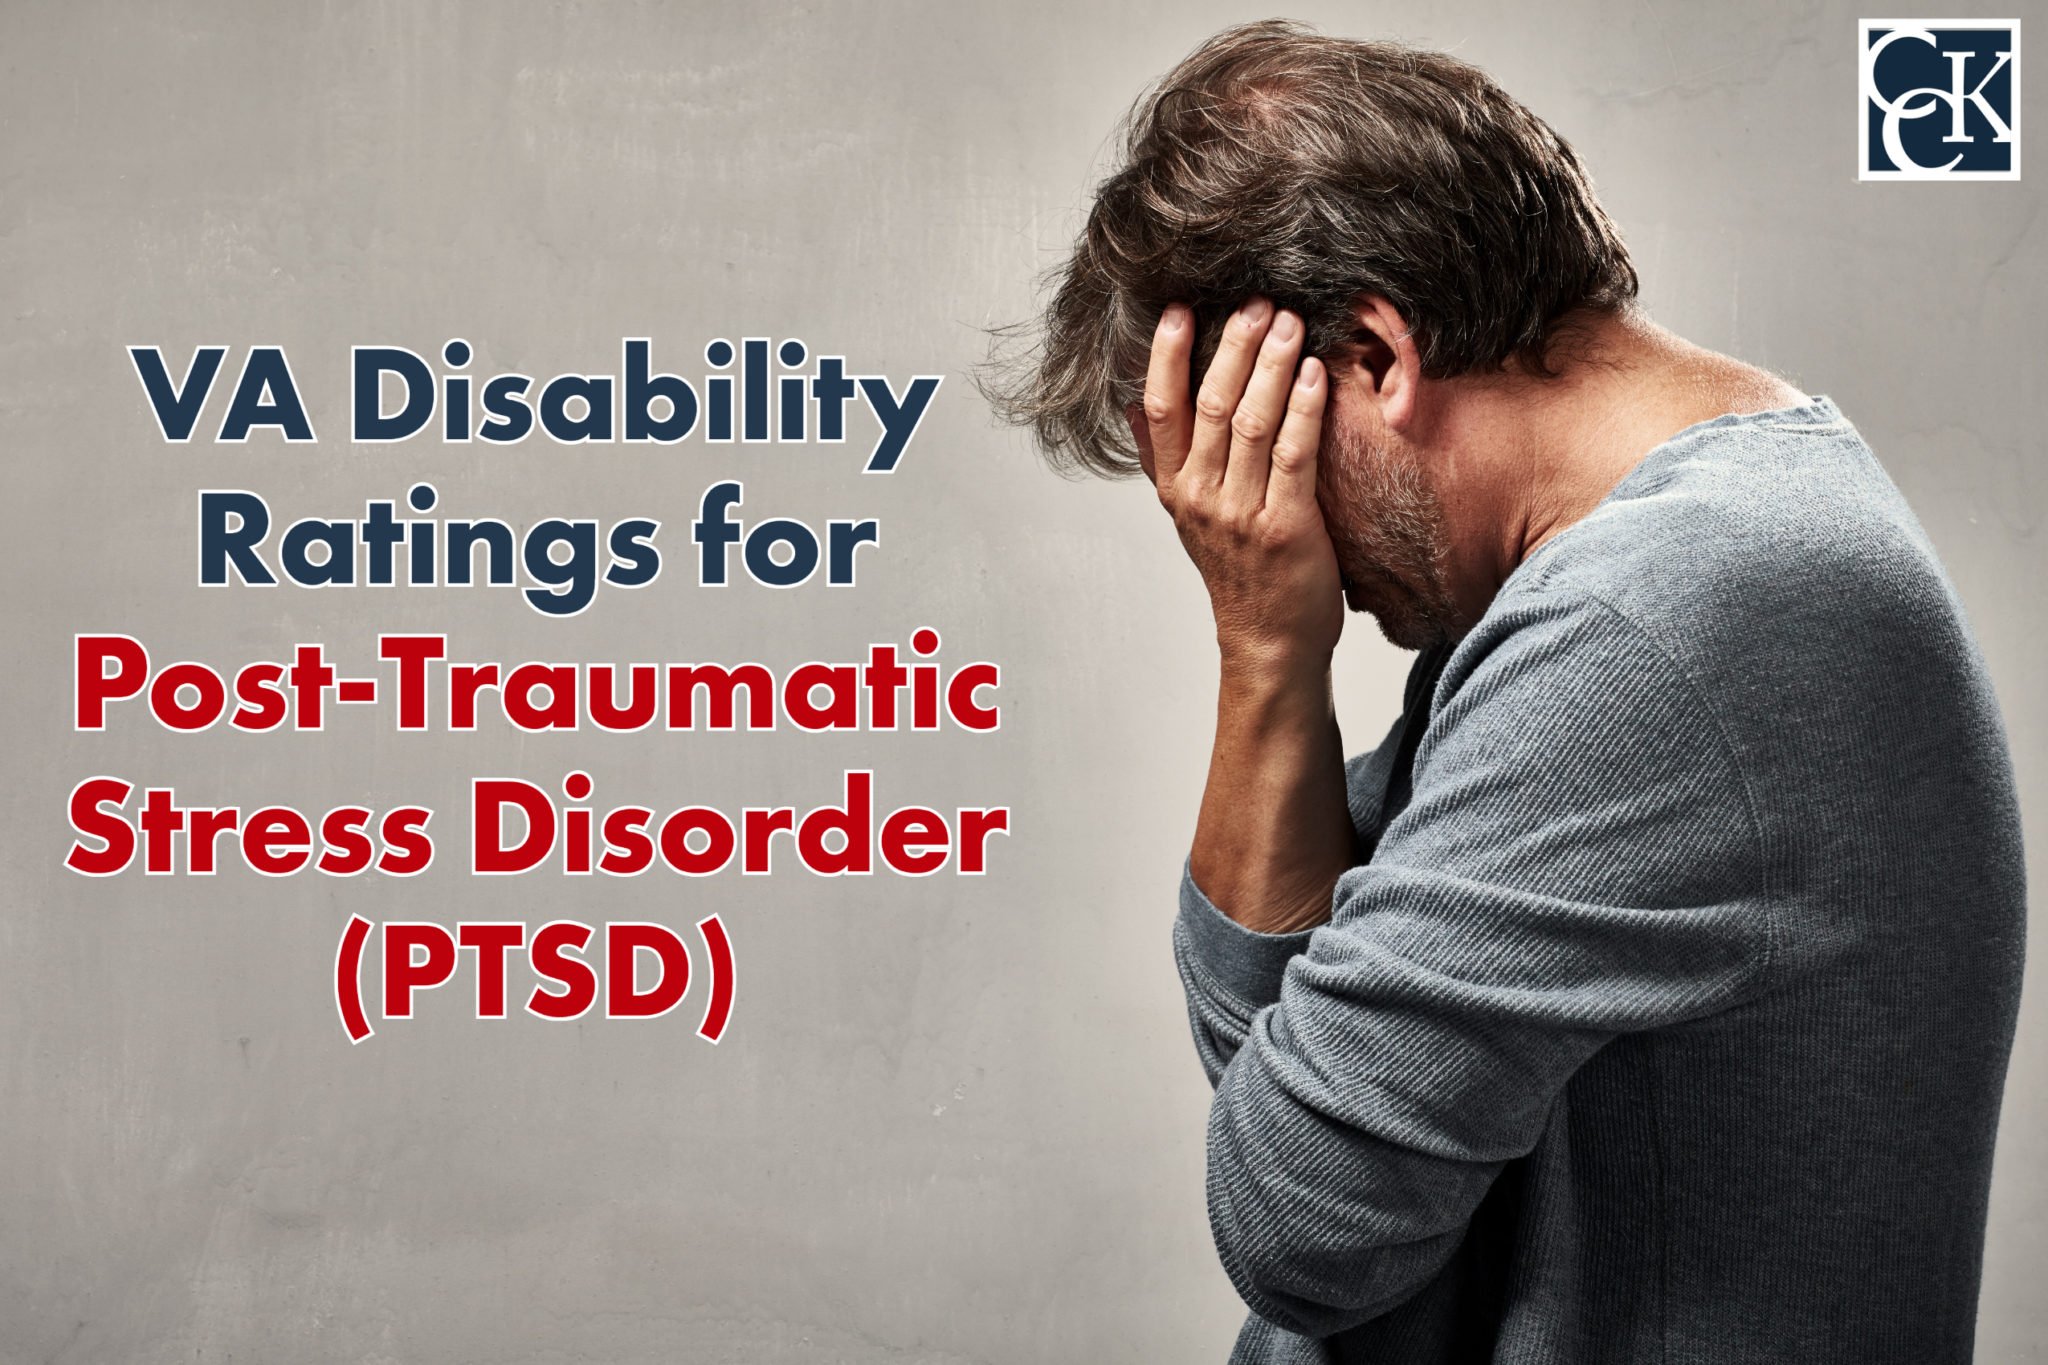 VA Disability Rating for PTSD Explained